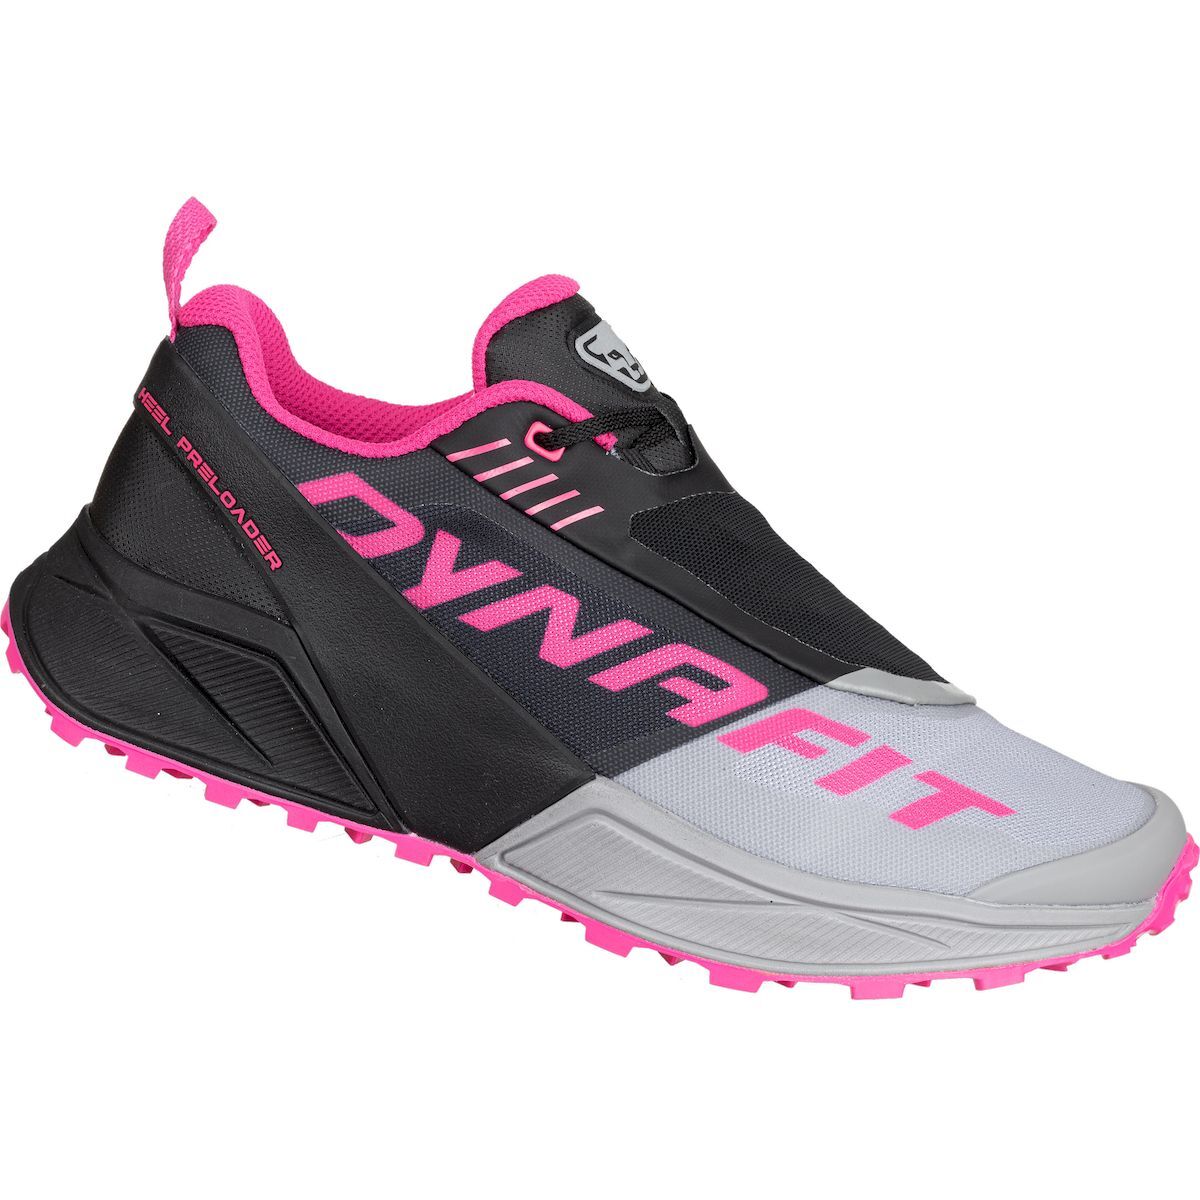 Dynafit Ultra 100 - Trail Running shoes - Women's